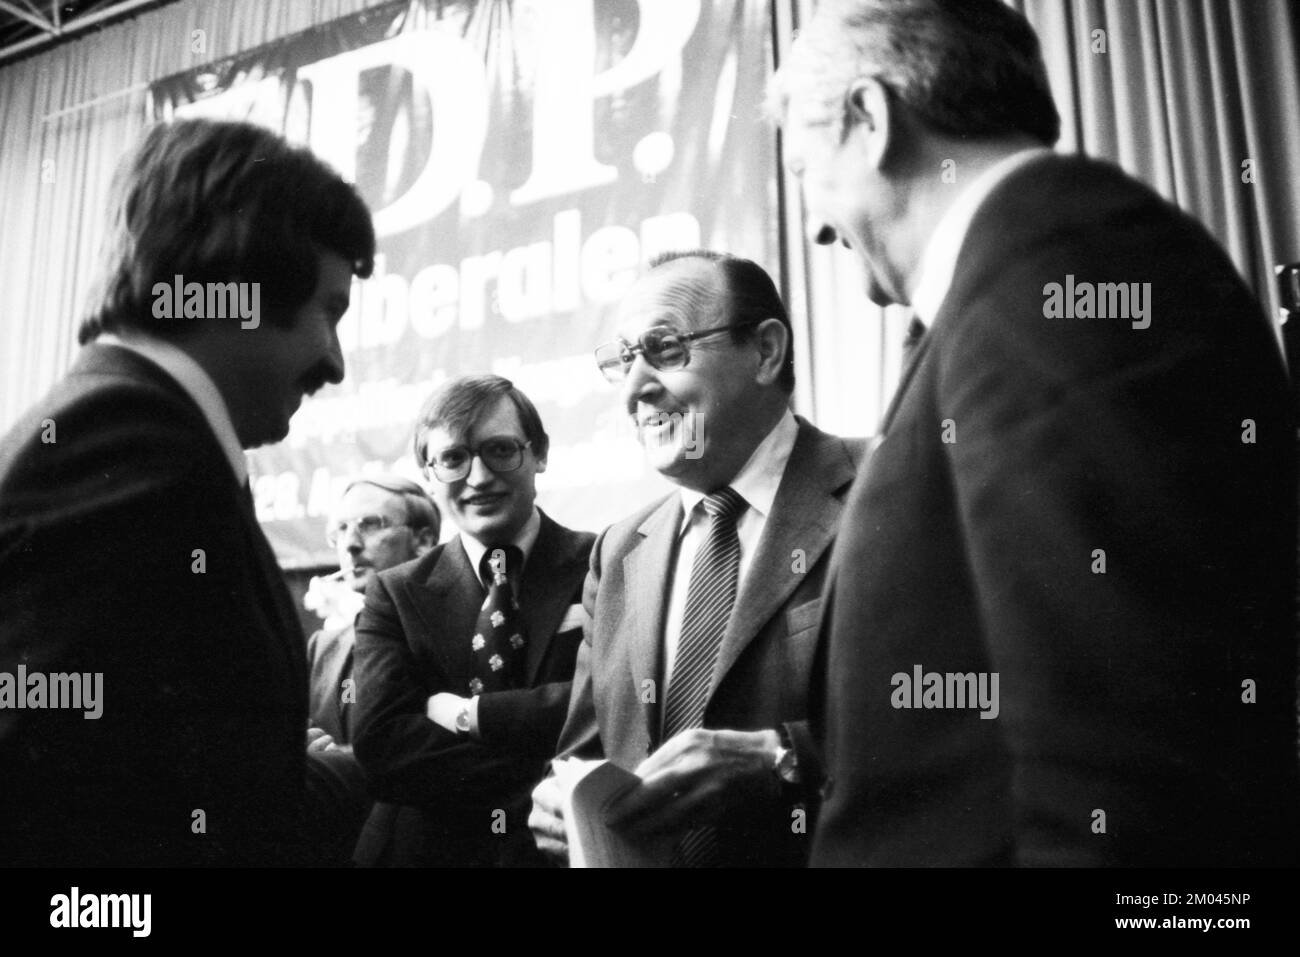 Defence policy congress of the Free Democratic Party (FDP) on 27.4.1979 in Muenster.Juergen Moellemann, Guenter Verheugen, Hans-Dietrich Genscher, N.N Stock Photo